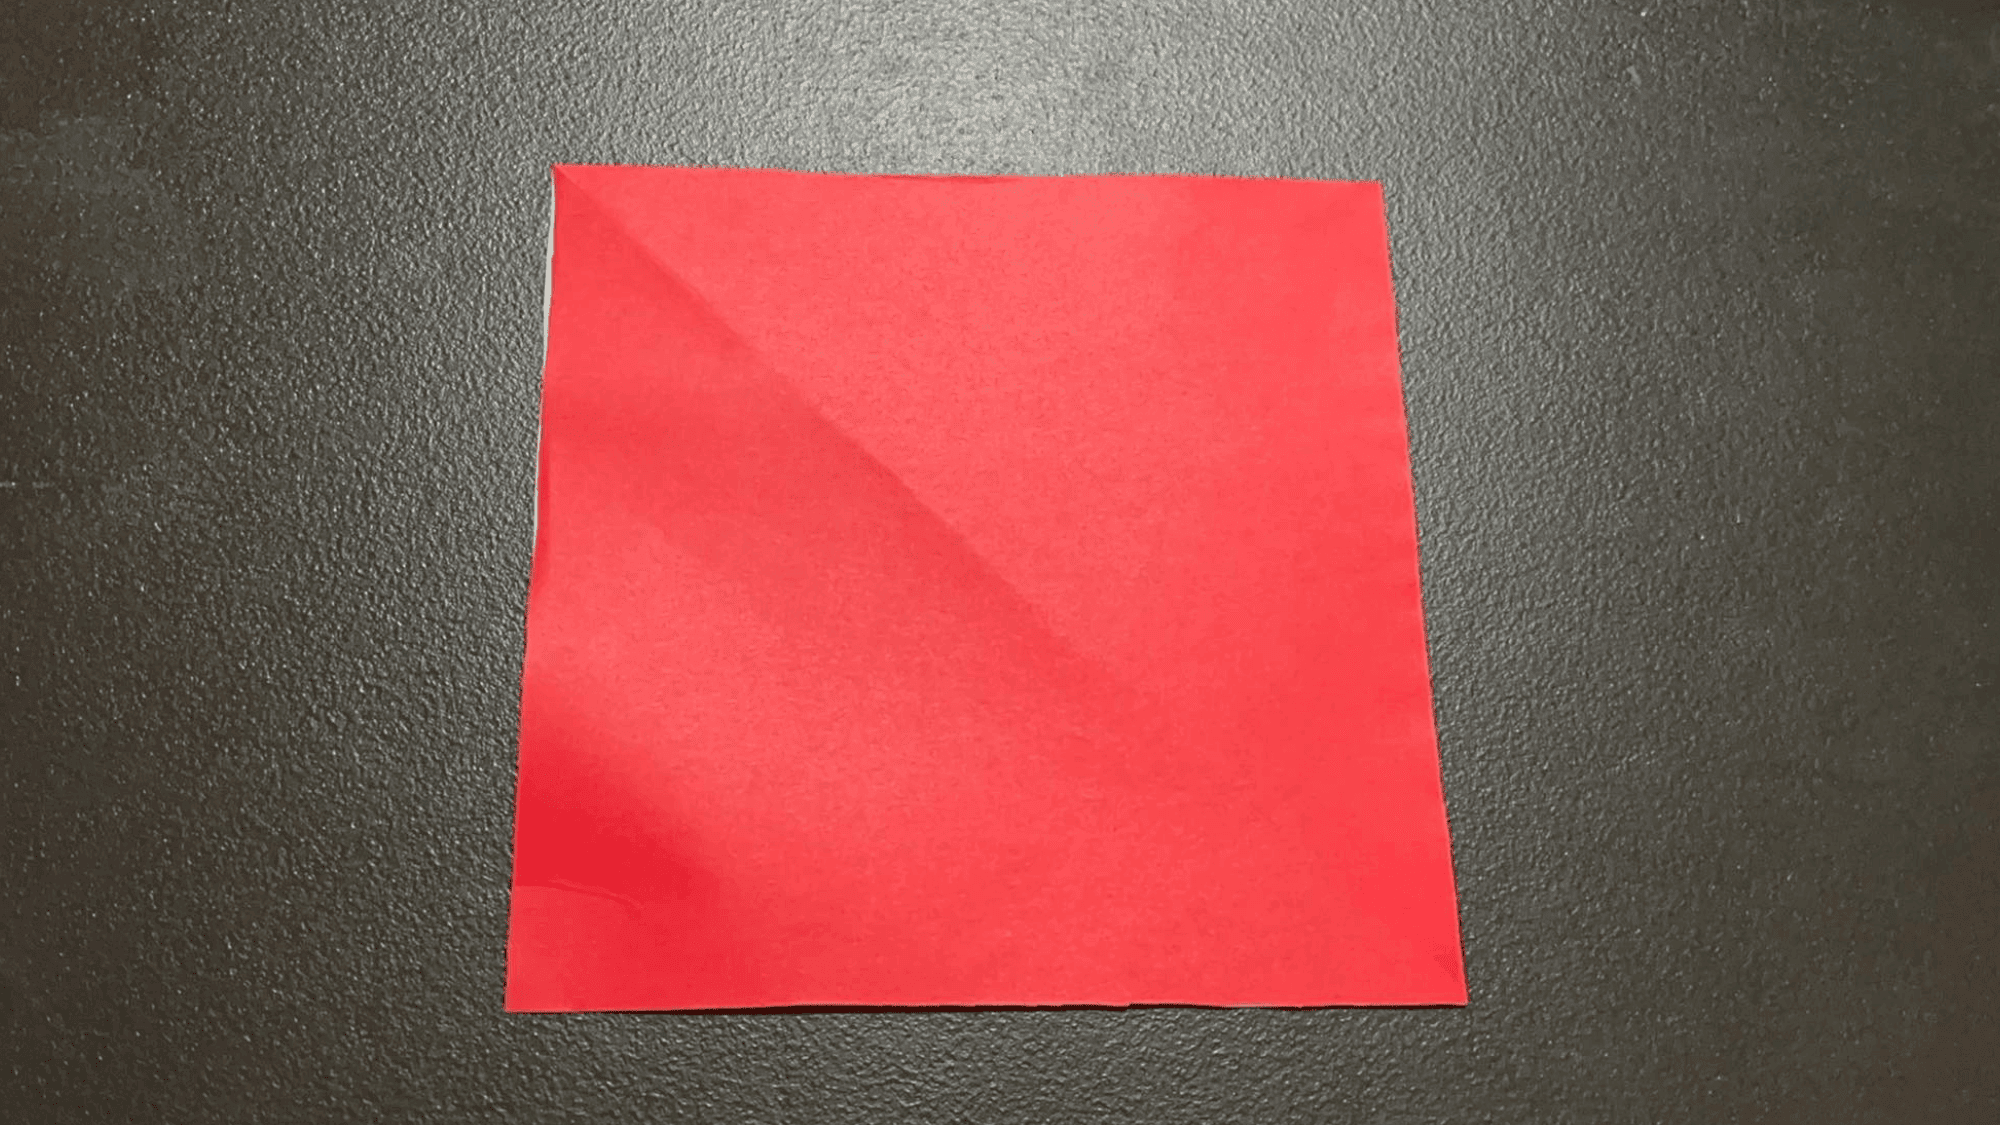 Origami Santa Claus Instructions Step 1